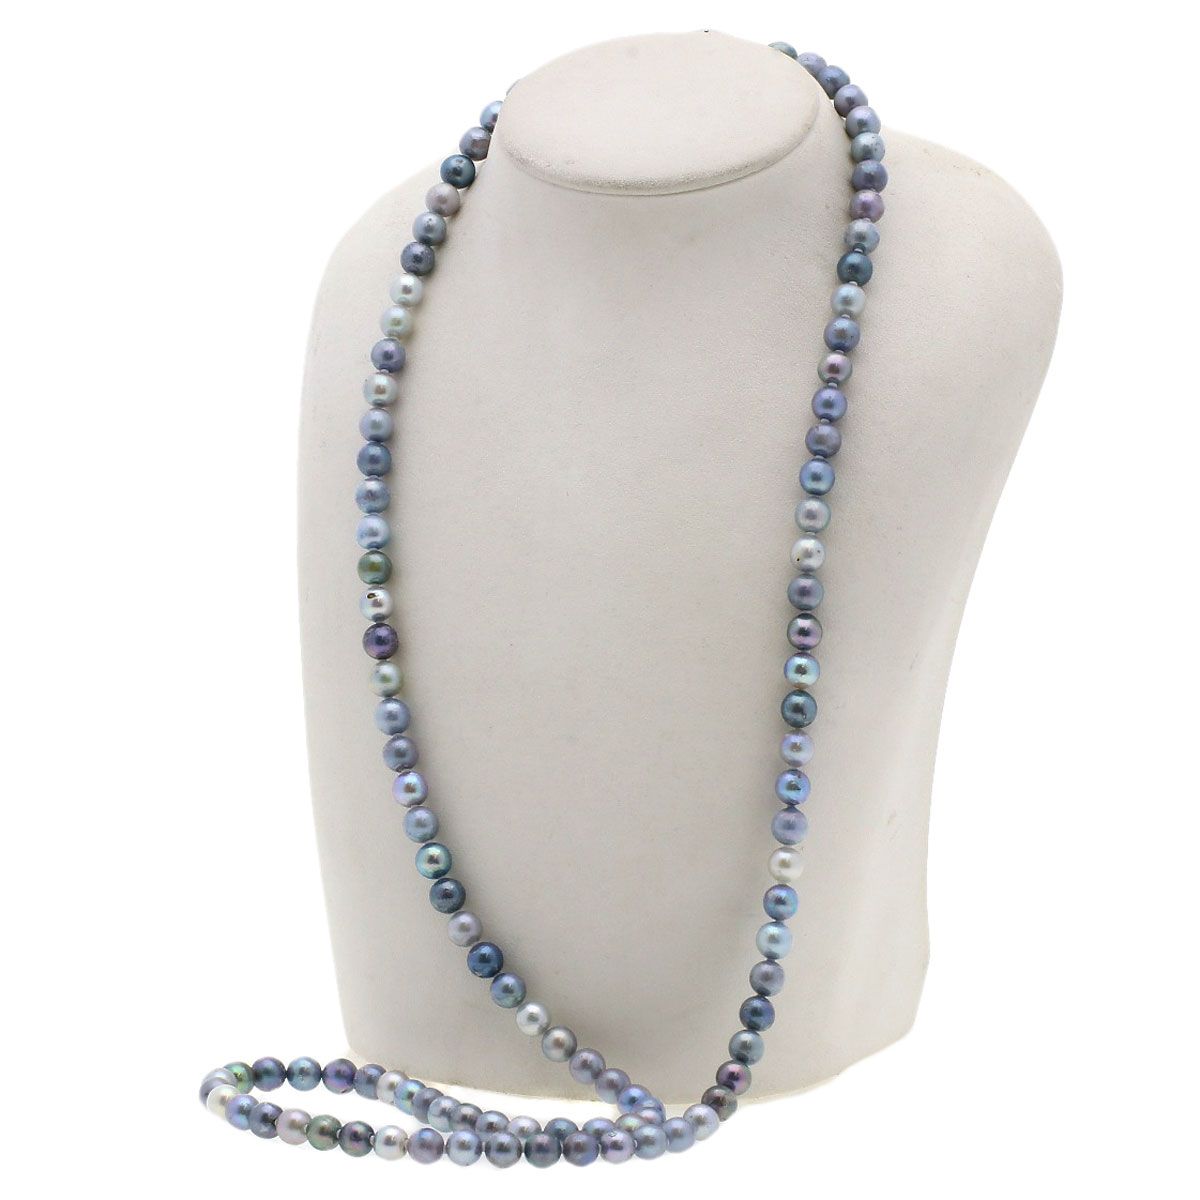 SELECT Jewelry セレクトジュエリー アコヤパール 真珠 ロング ネックレス 金属製 レディース